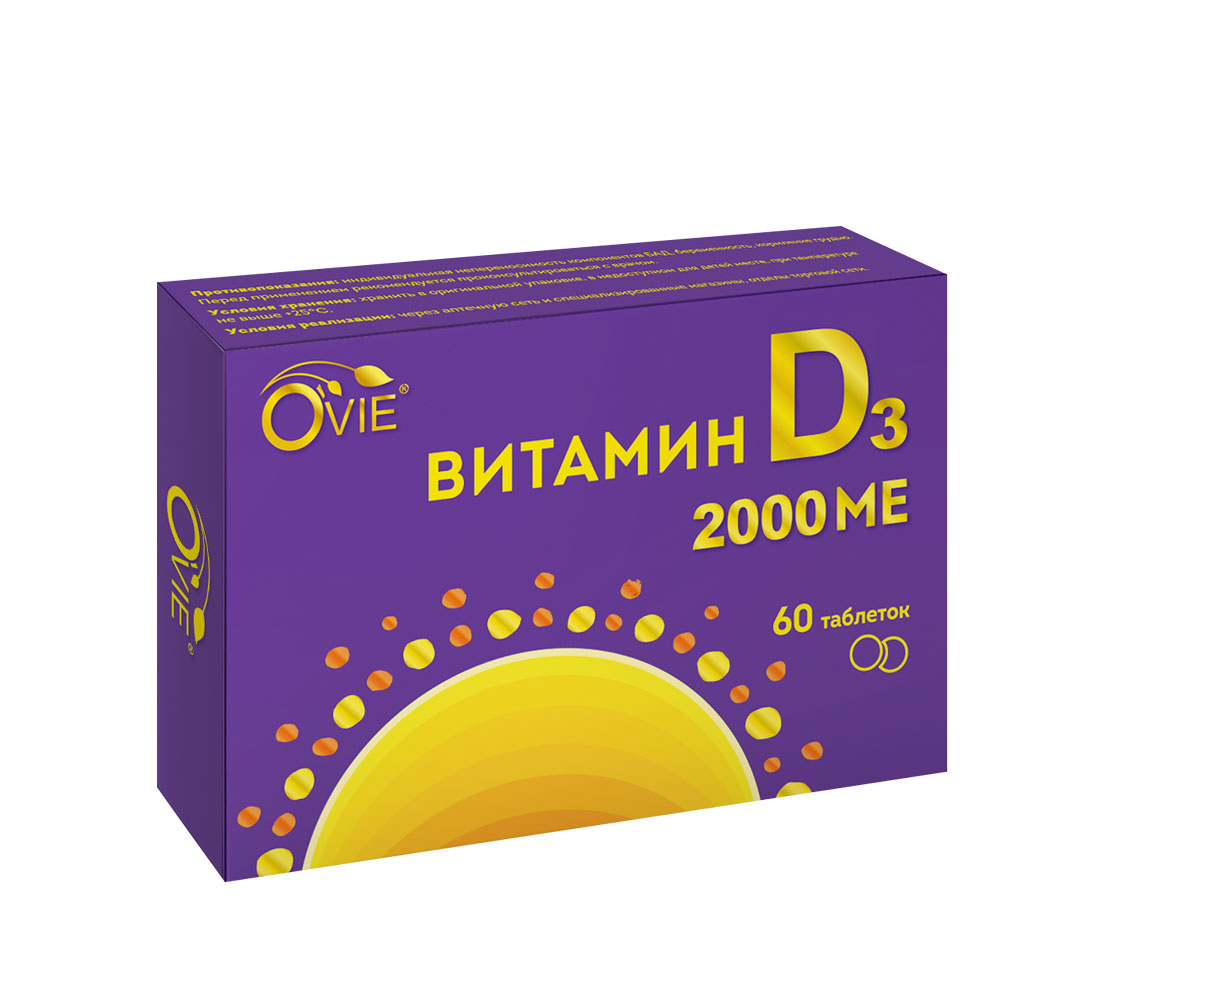 OVIE Витамин D3 2000МЕ Форте таблетки №60